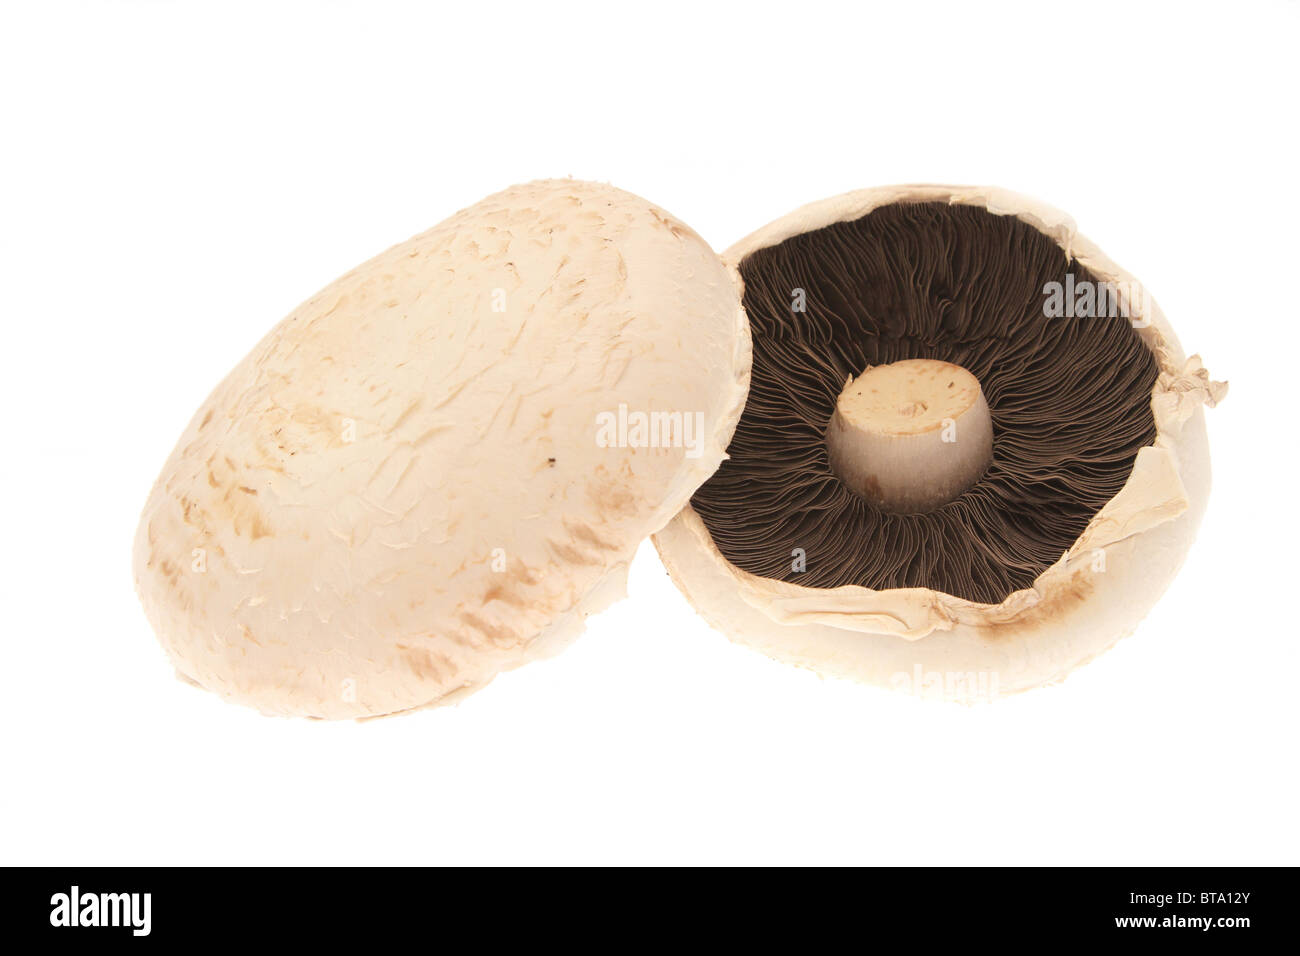 Two common mushrooms (Agaricus bisporus) on a white background. Stock Photo